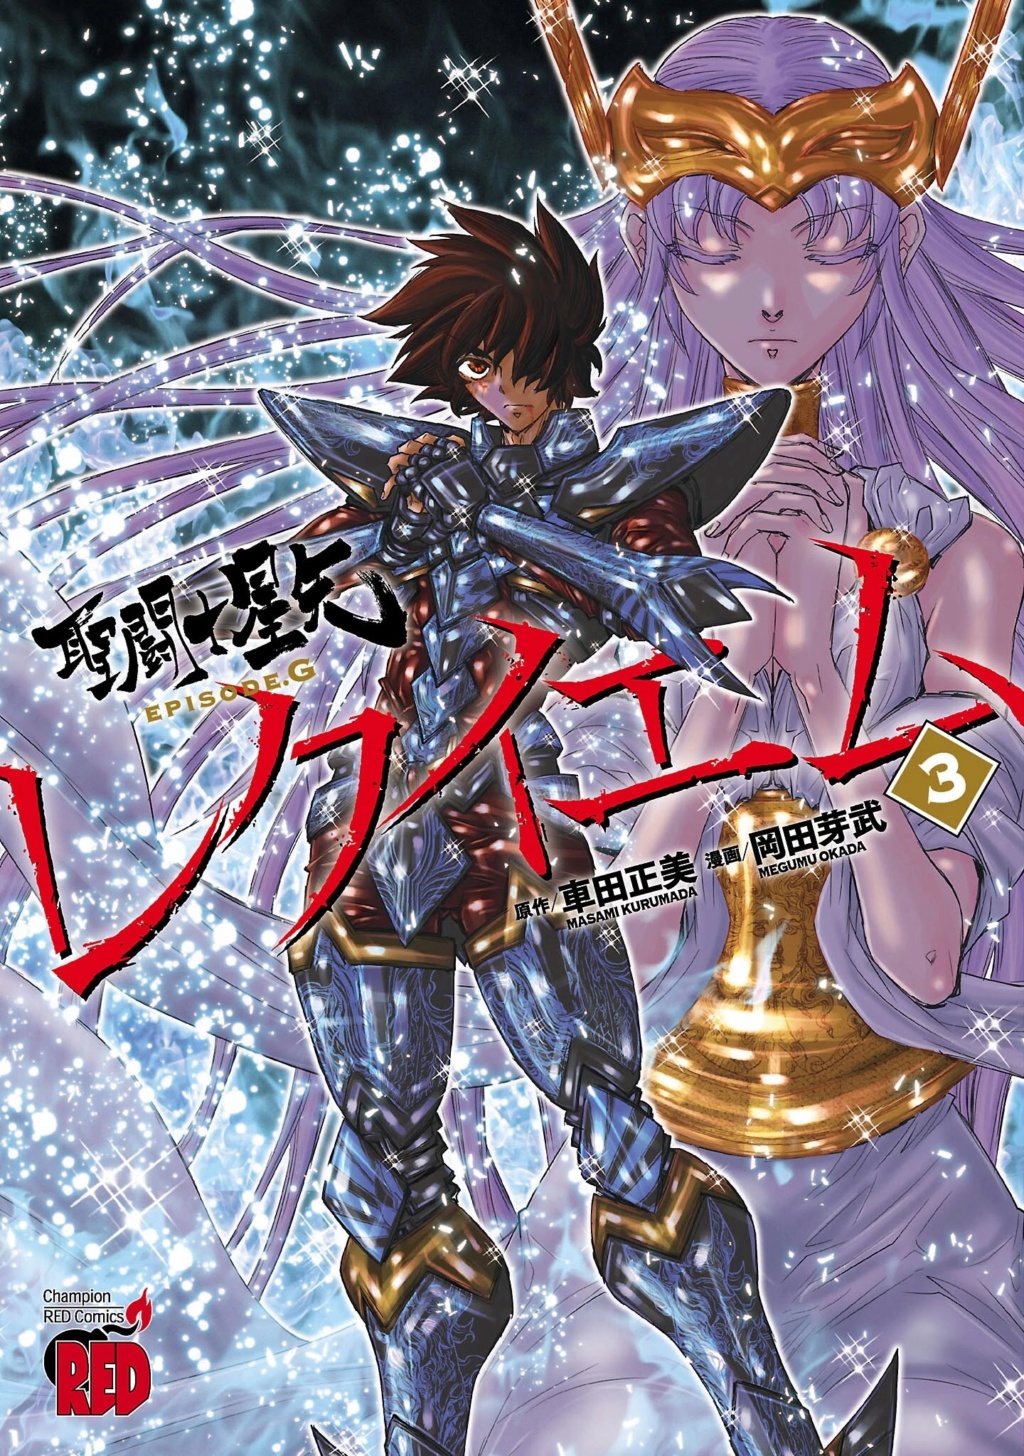 Episodio G Requiem en Español - Manga - Descarga Directa 00313